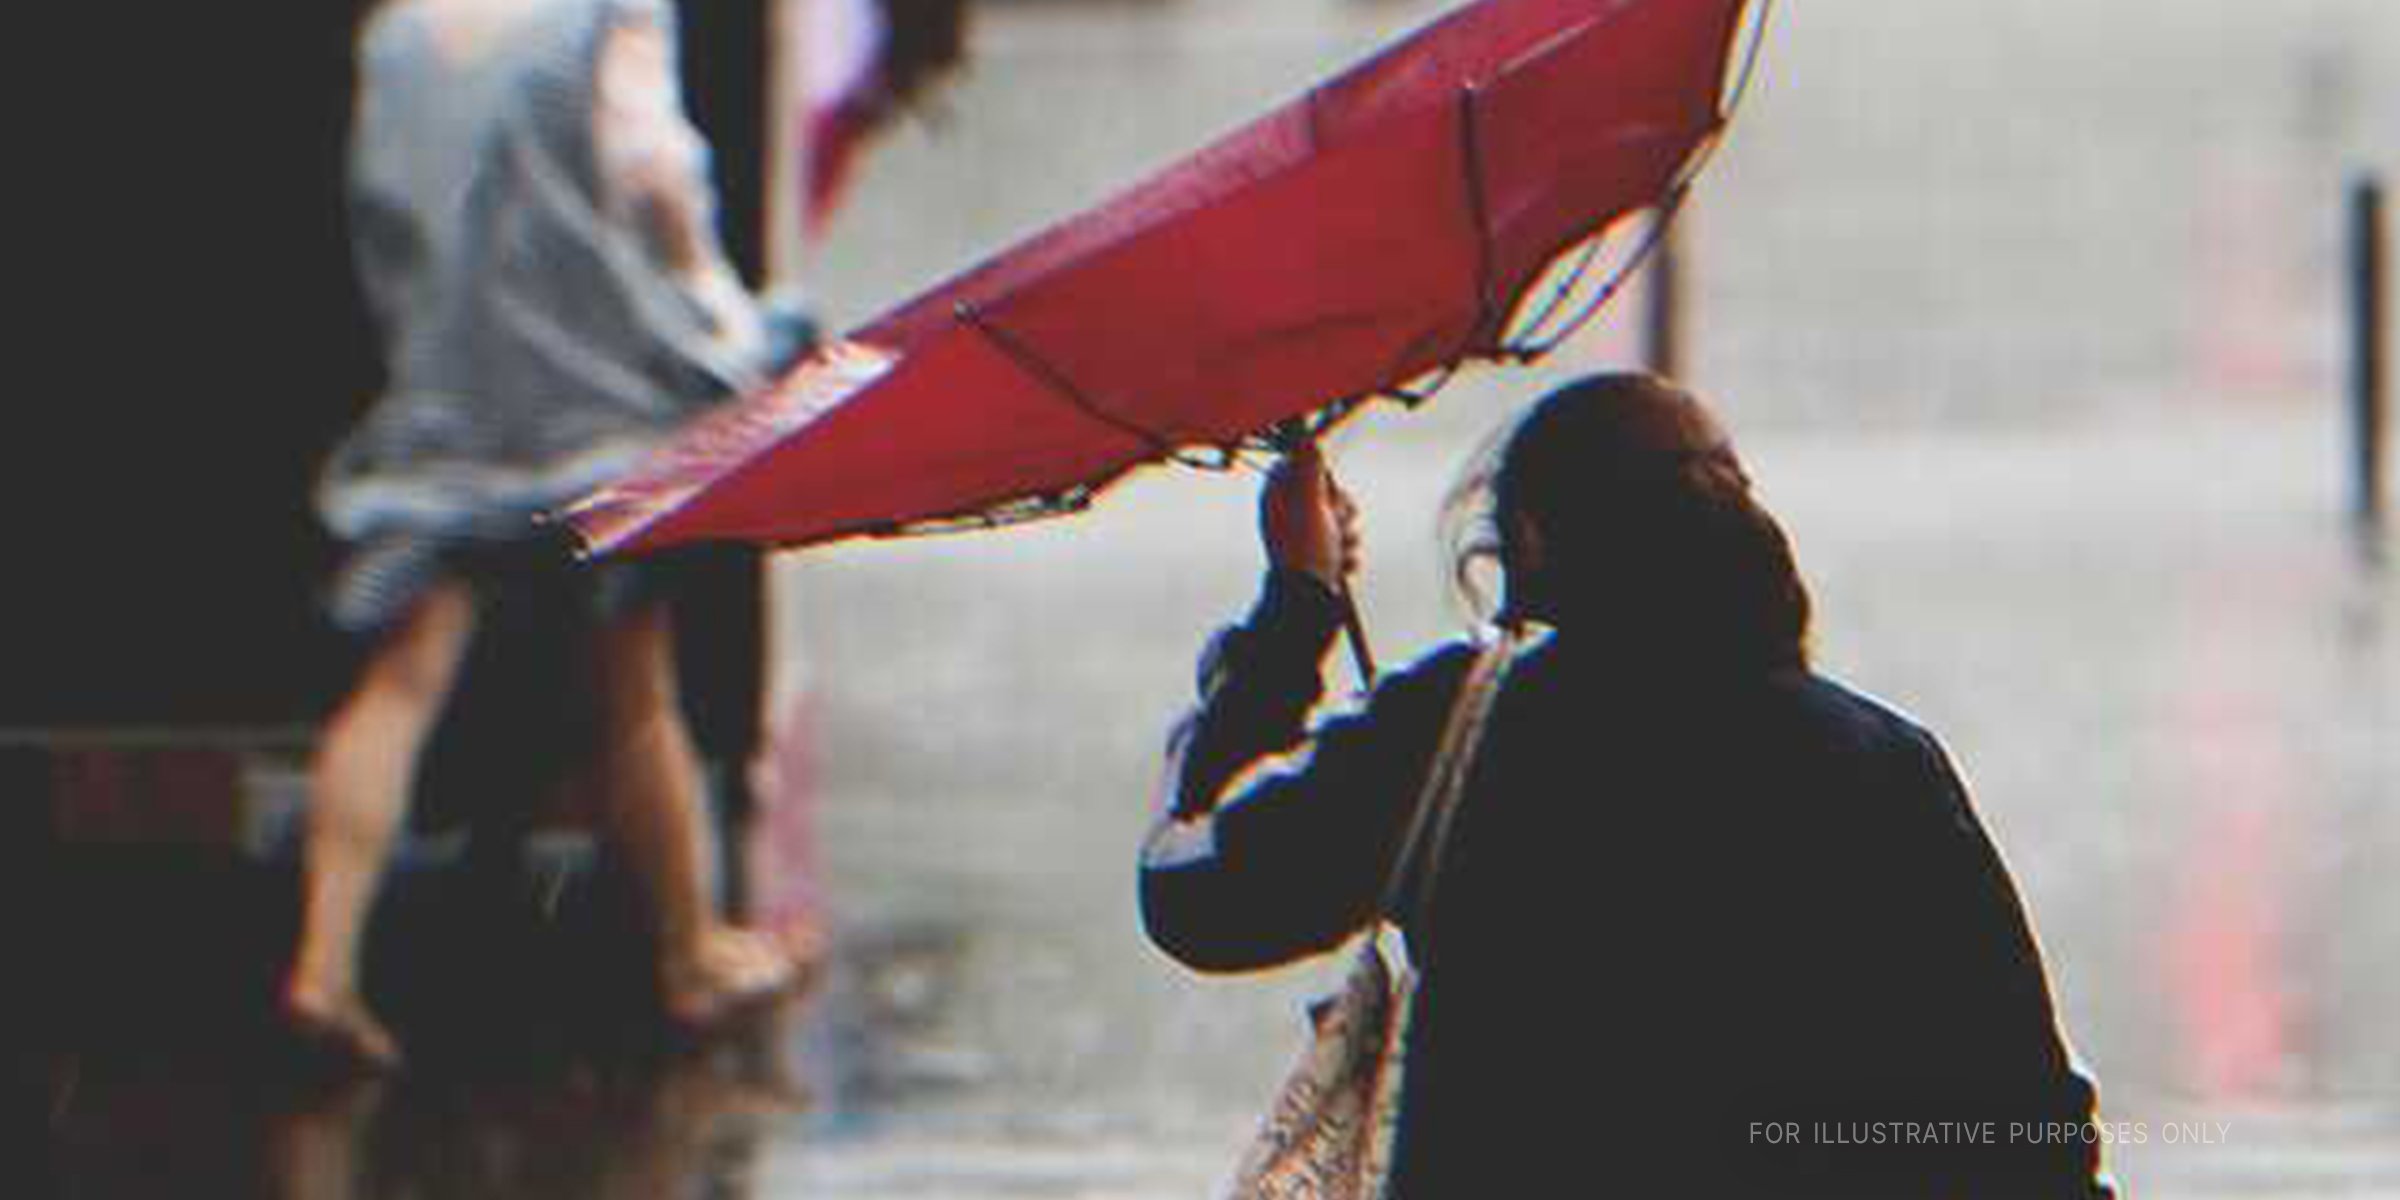 Mujer caminando bajo la lluvia con un paraguas. | Foto: Shutterstock